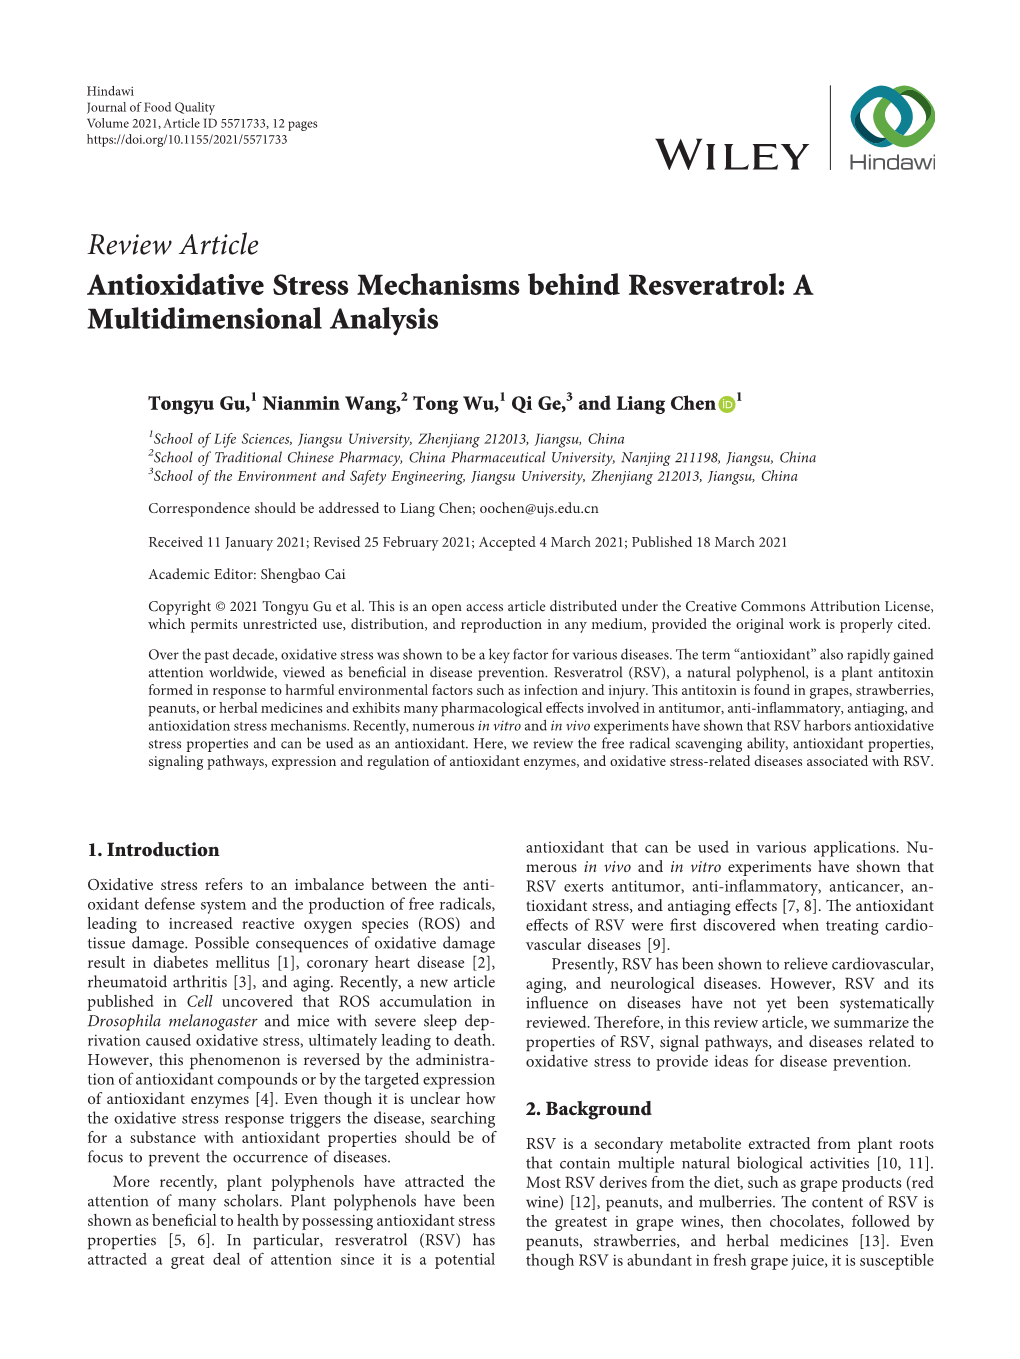 Antioxidative Stress Mechanisms Behind Resveratrol: a Multidimensional Analysis